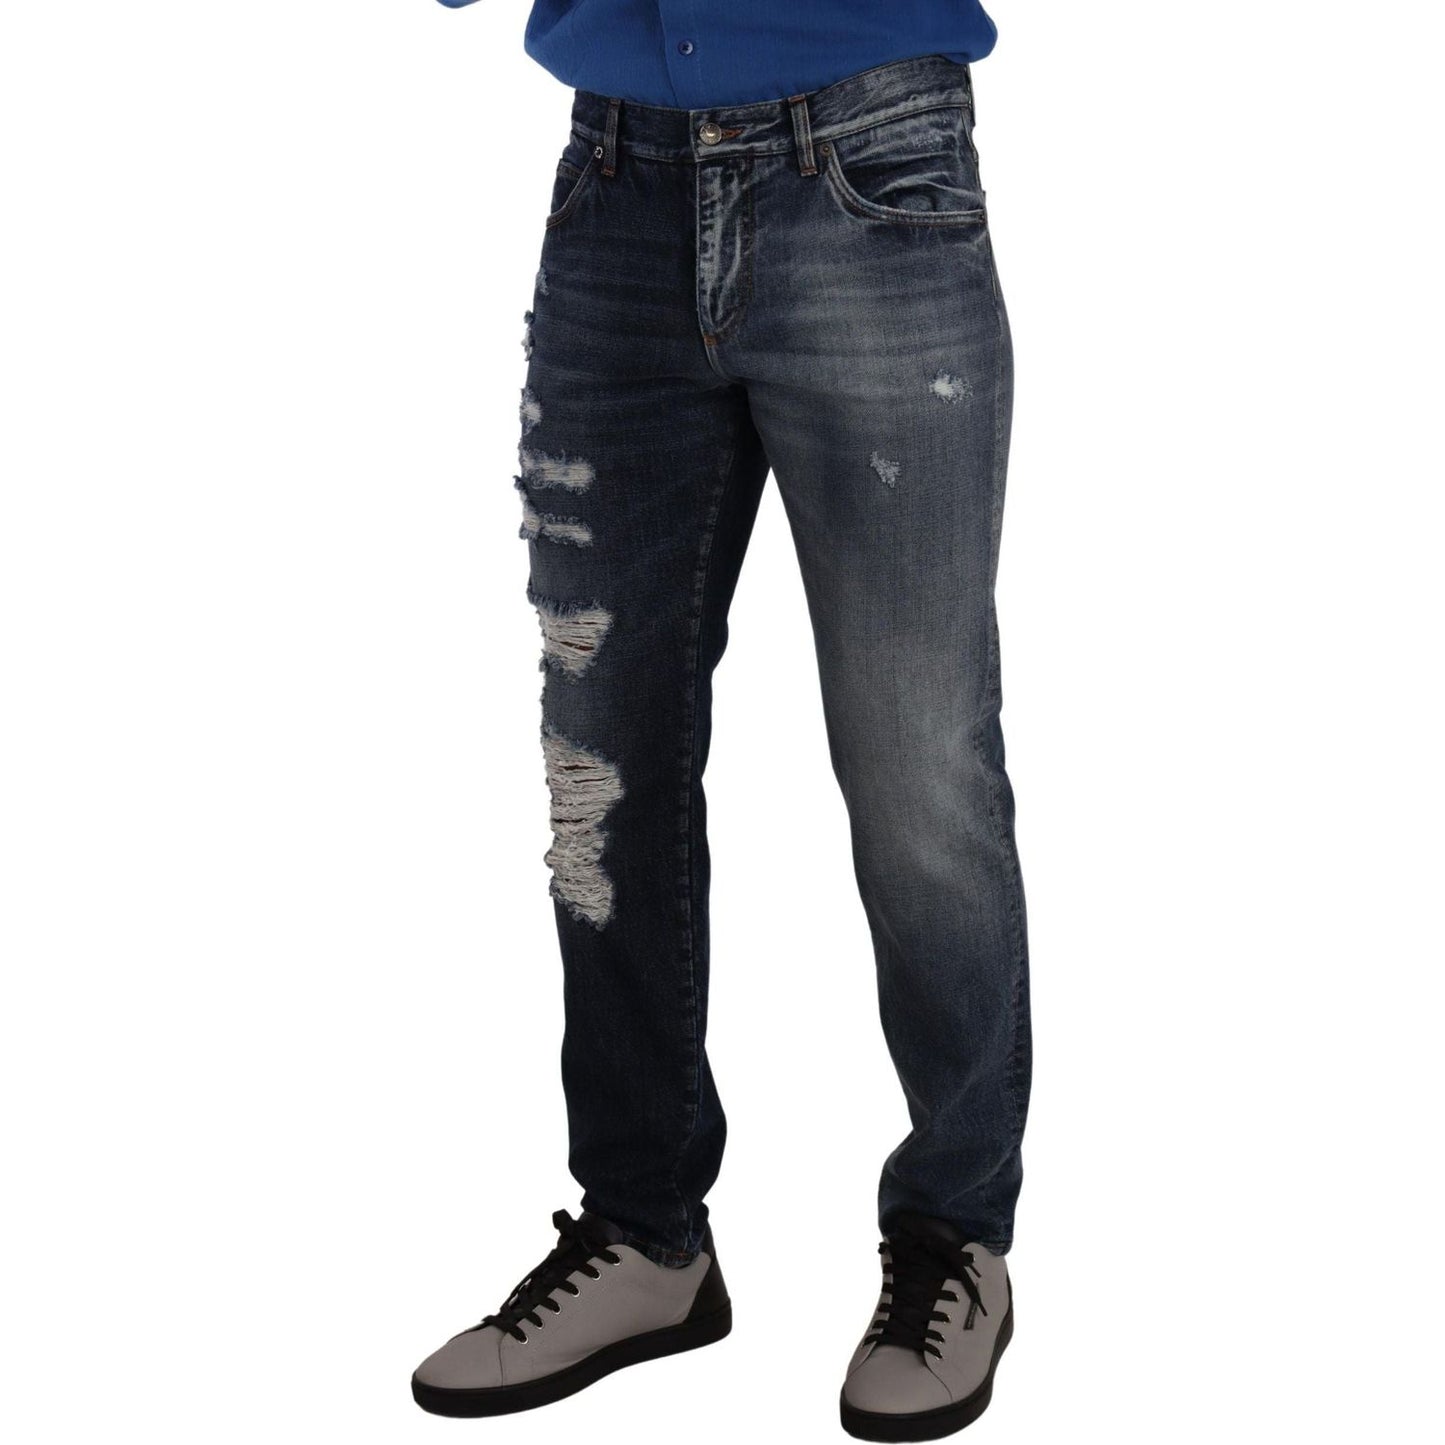 Dolce & Gabbana Chic Tattered Denim Jeans blue-cotton-regular-denim-trousers-jeans